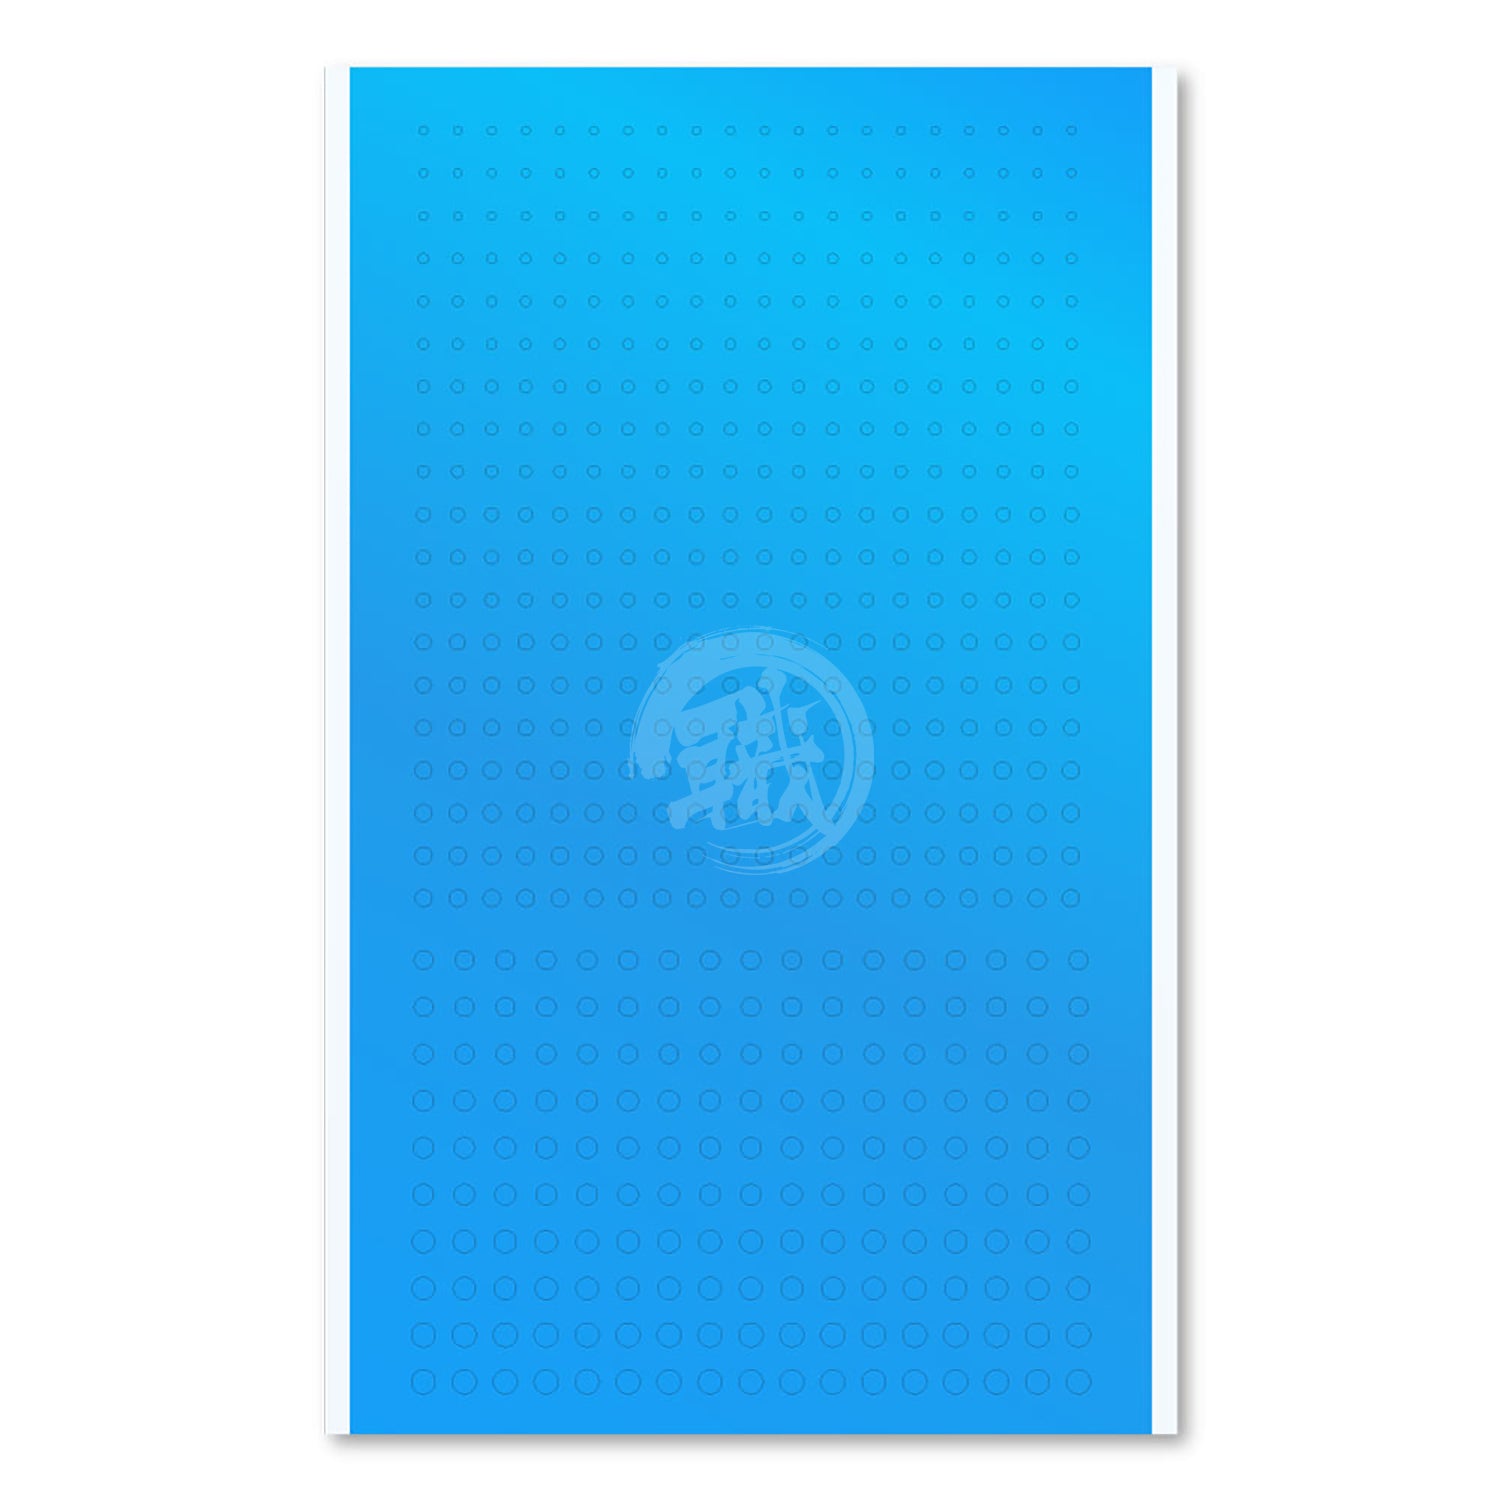 HIQParts - Metallic Circular Stickers [Blue] - ShokuninGunpla